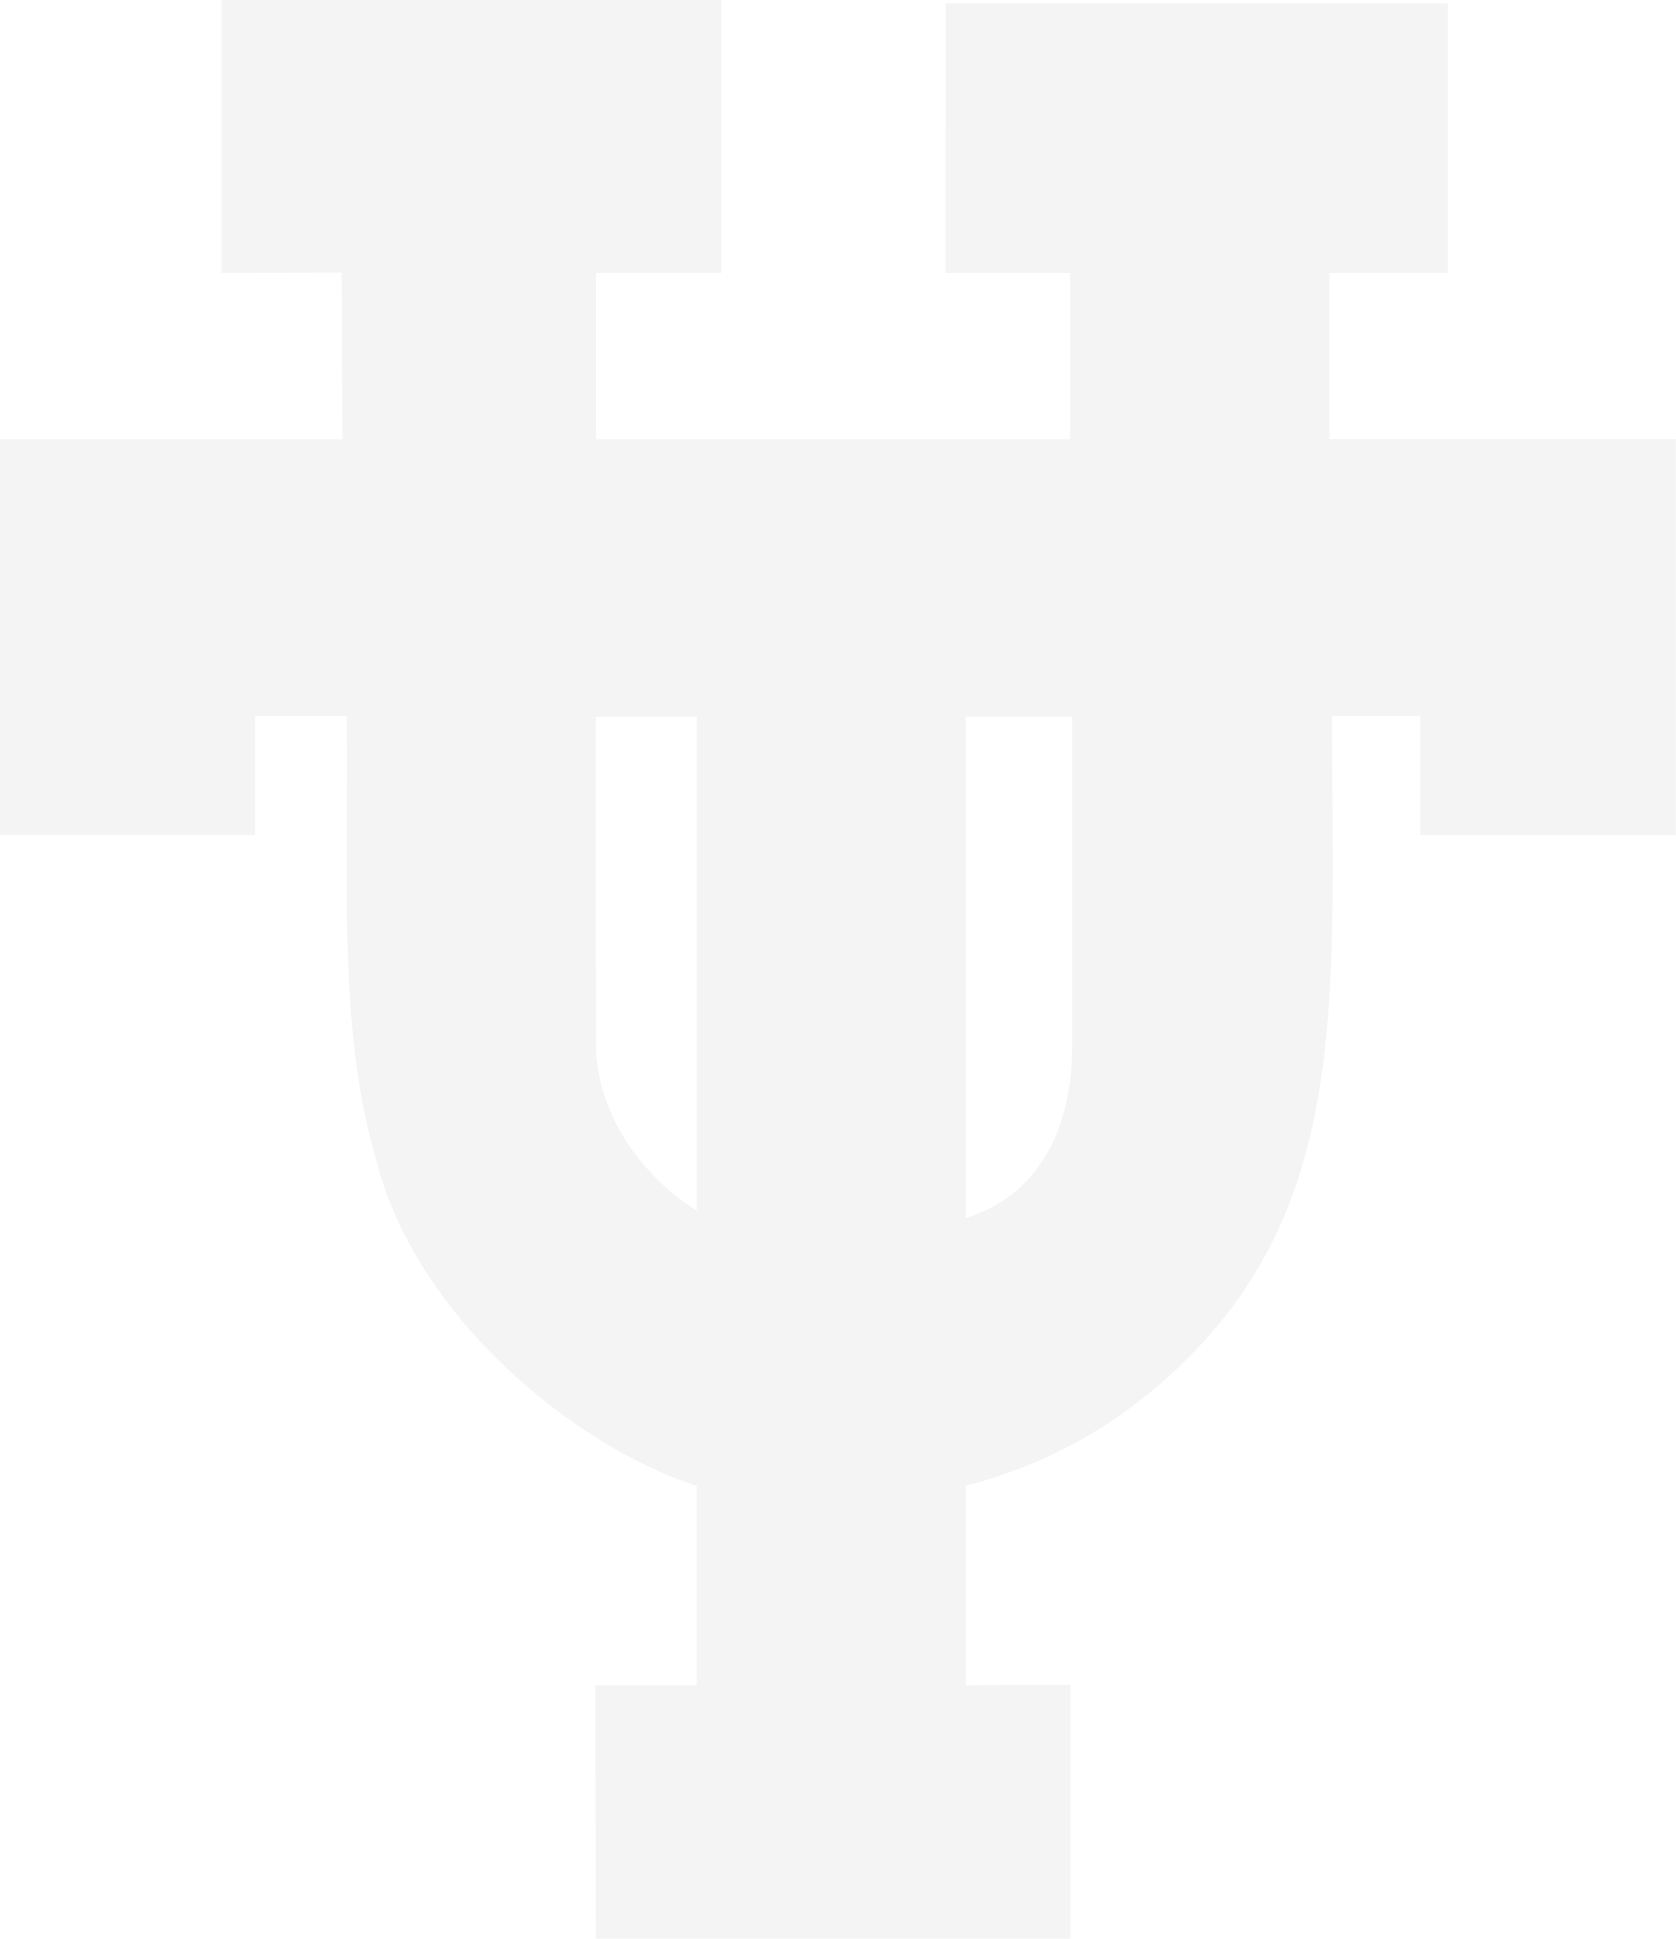 UT&T_text_logo-whitegrey.png